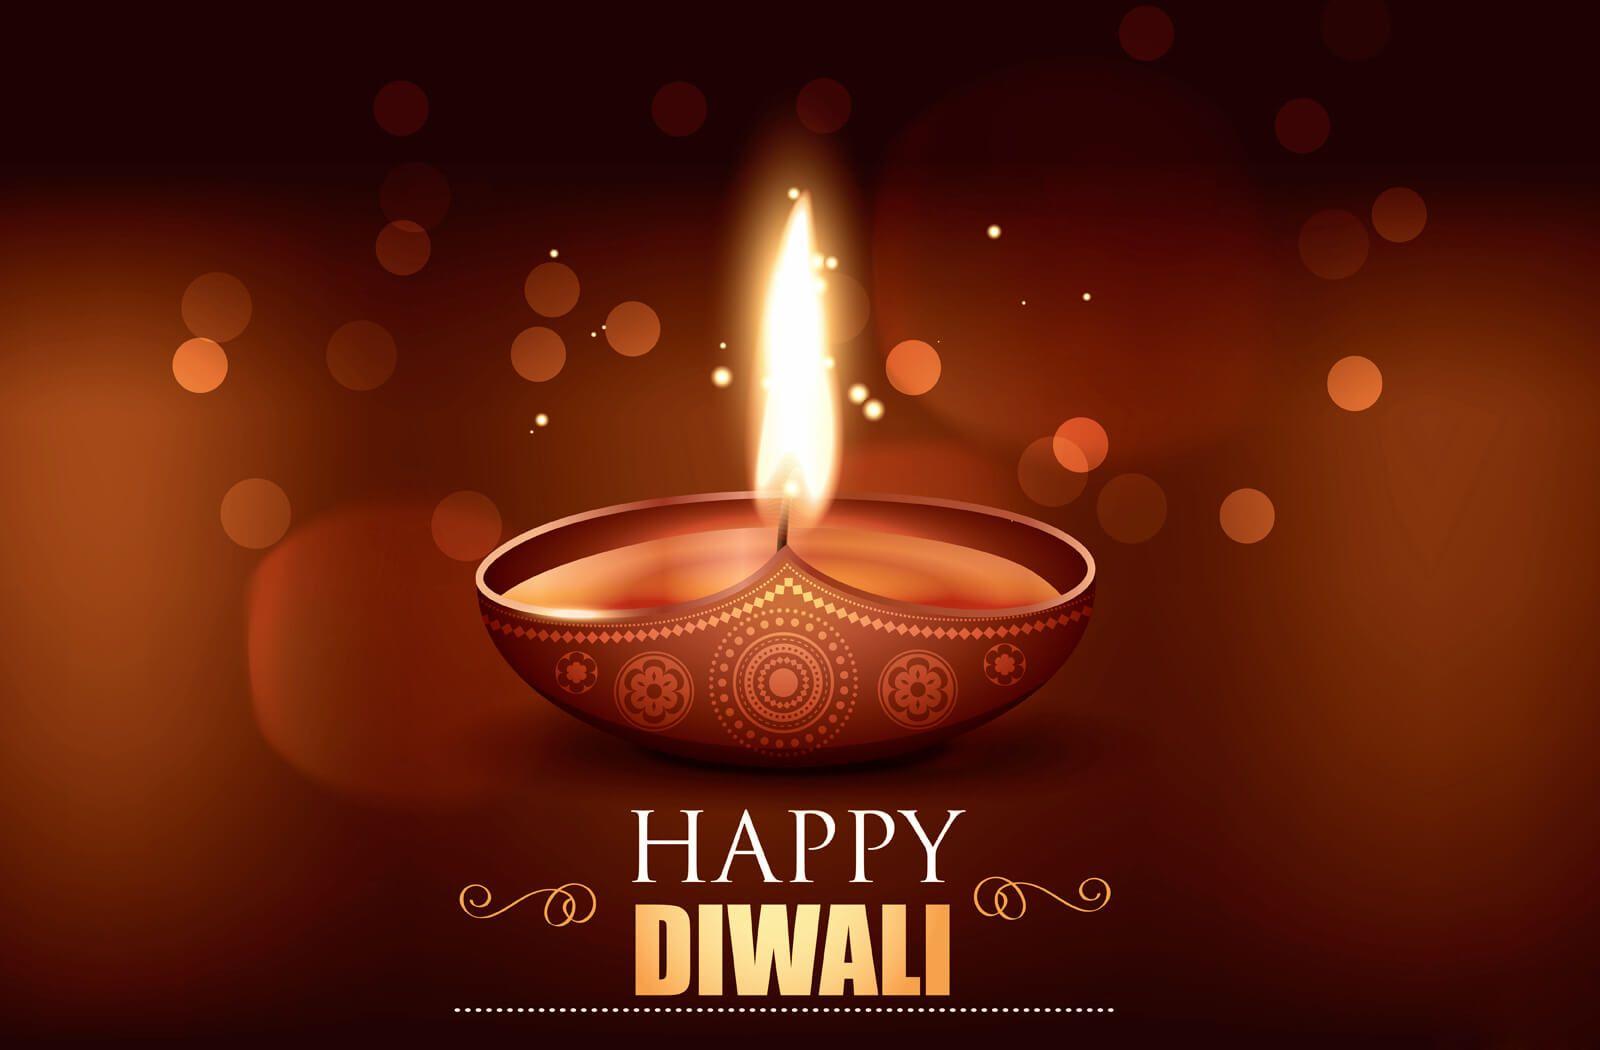 Happy Diwali Wallpapers - Top Free Happy Diwali Backgrounds ...